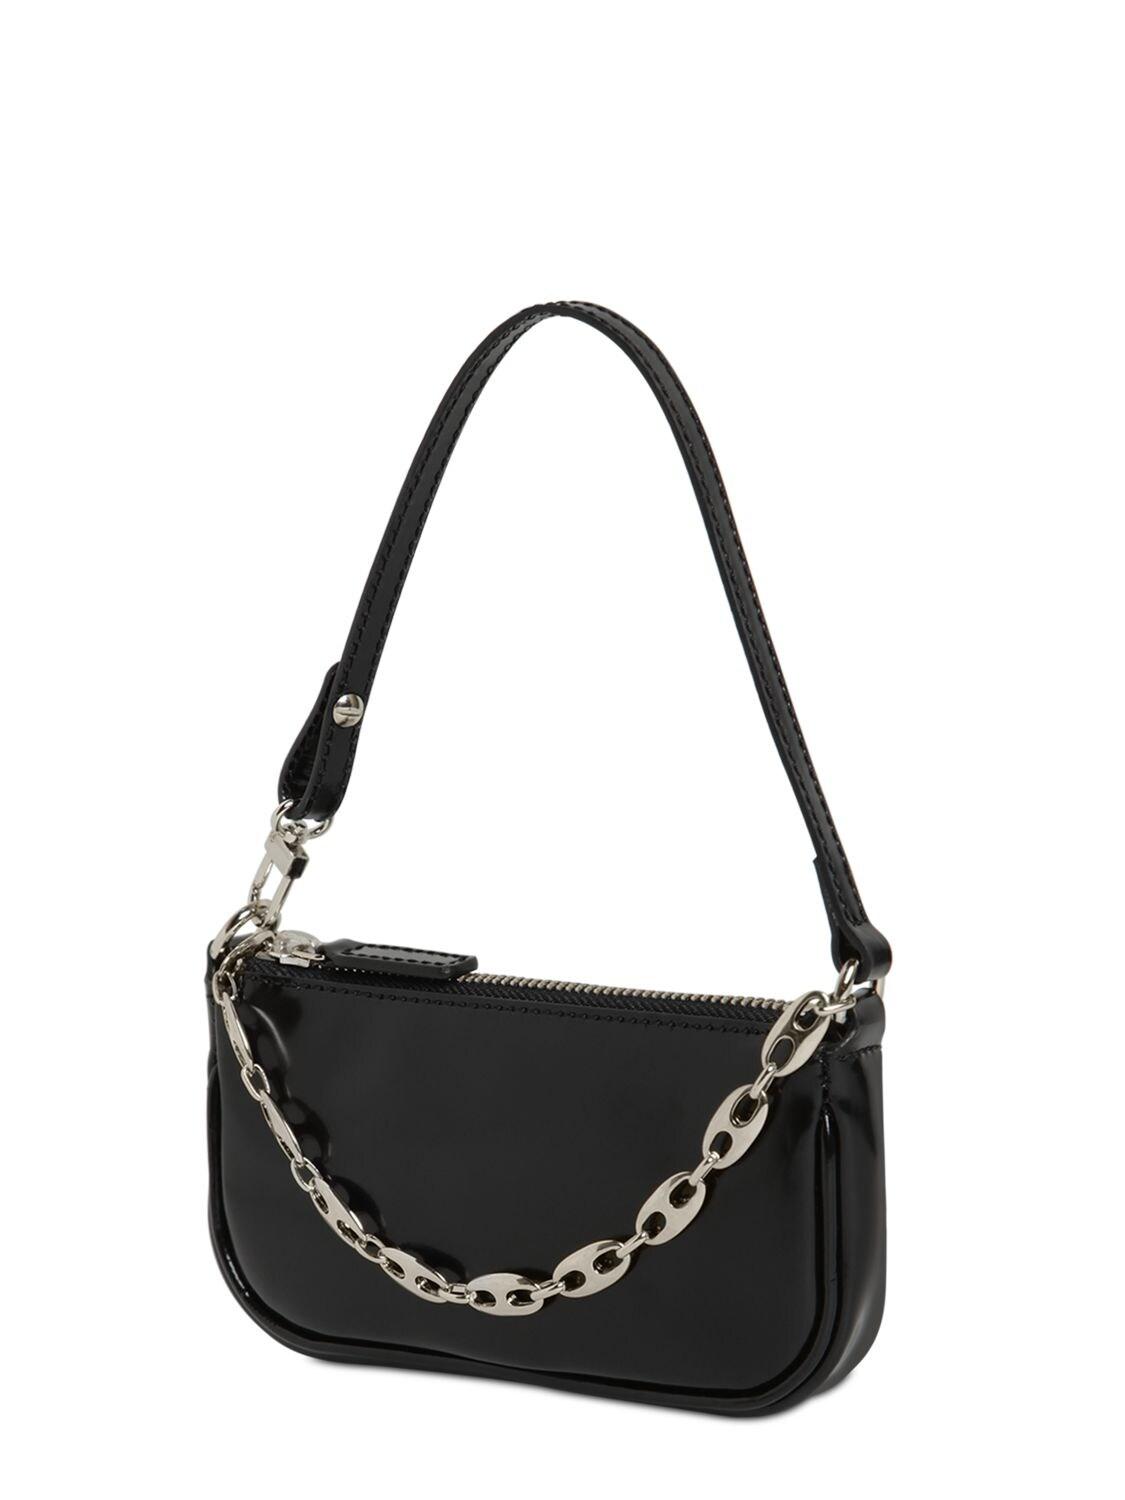 BY FAR Rachel Mini Patent Leather Shoulder Bag in Black - Save 32 